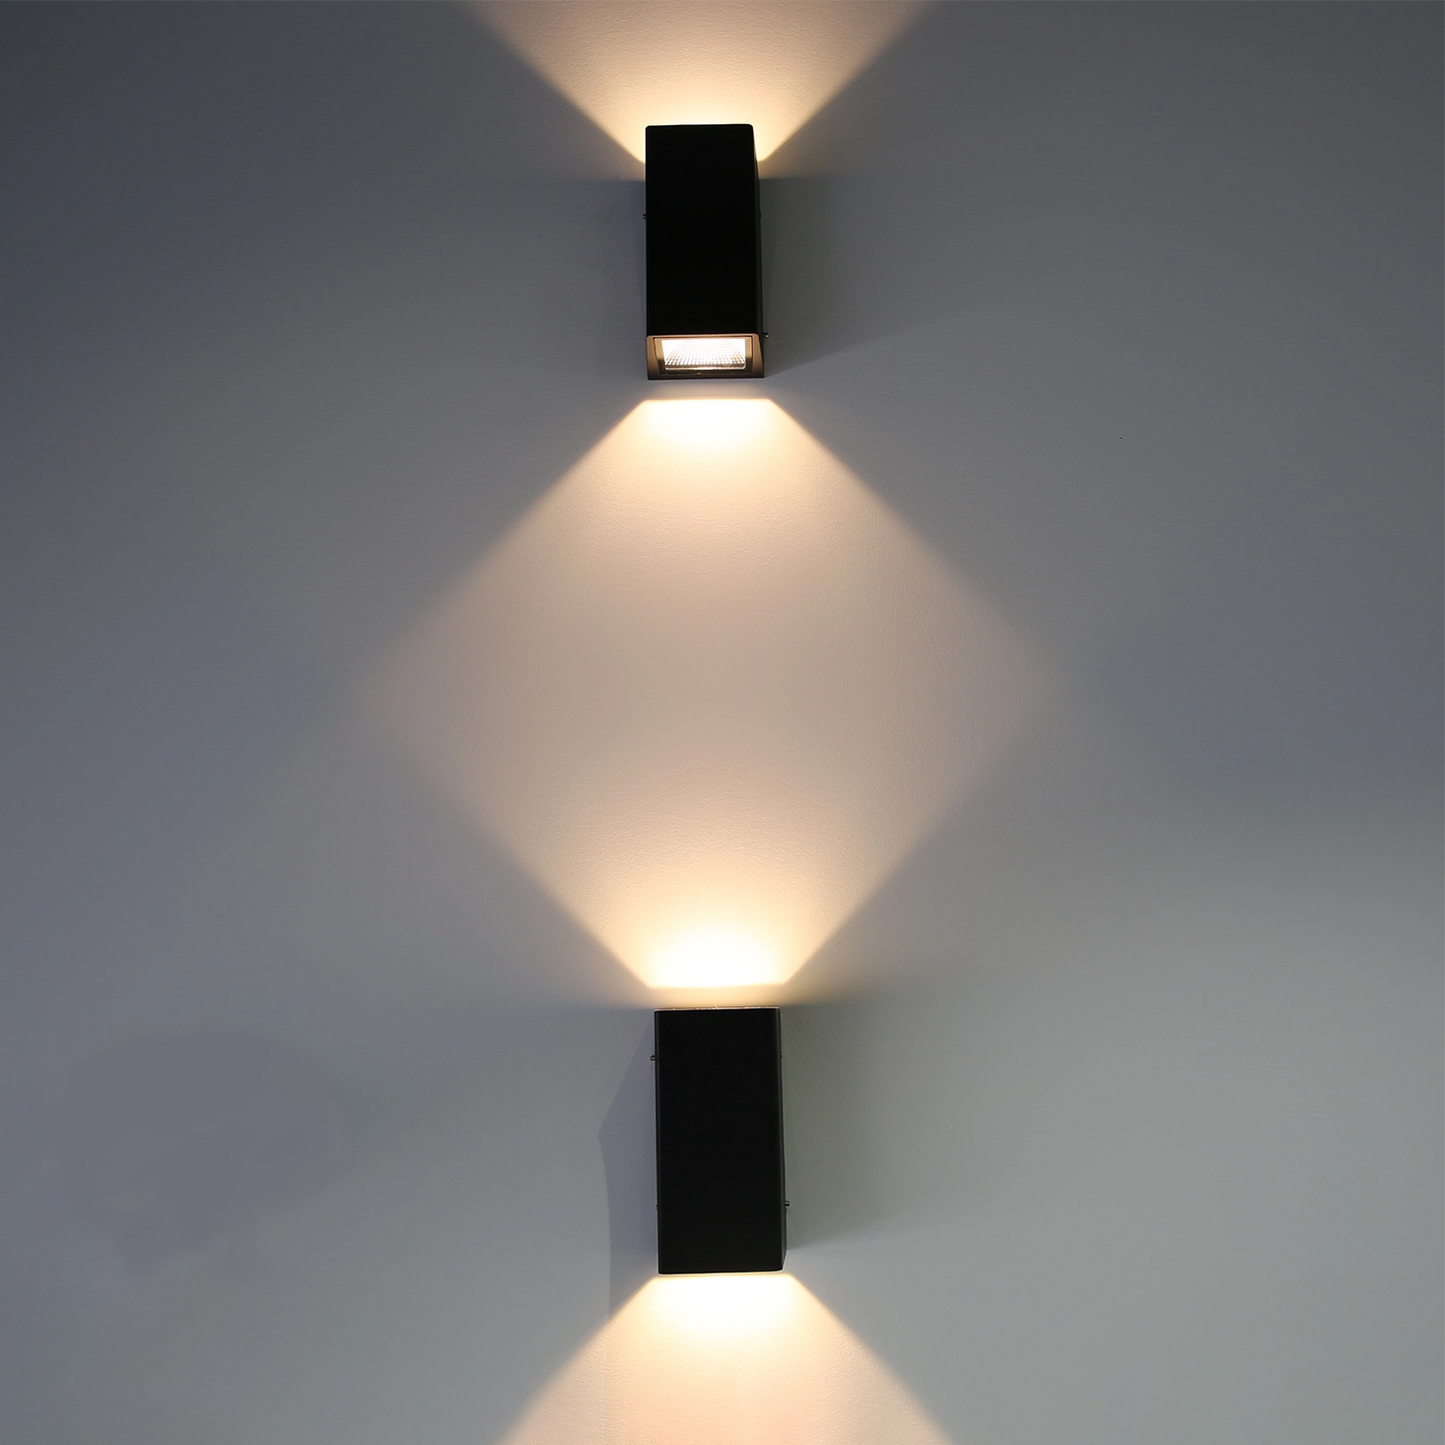 Wall Light, Porch light, Alfresco light, Ambient light, Up and Down Light, 240V AC, 2 x 5W, IP54, 2700K, Square, Sand white